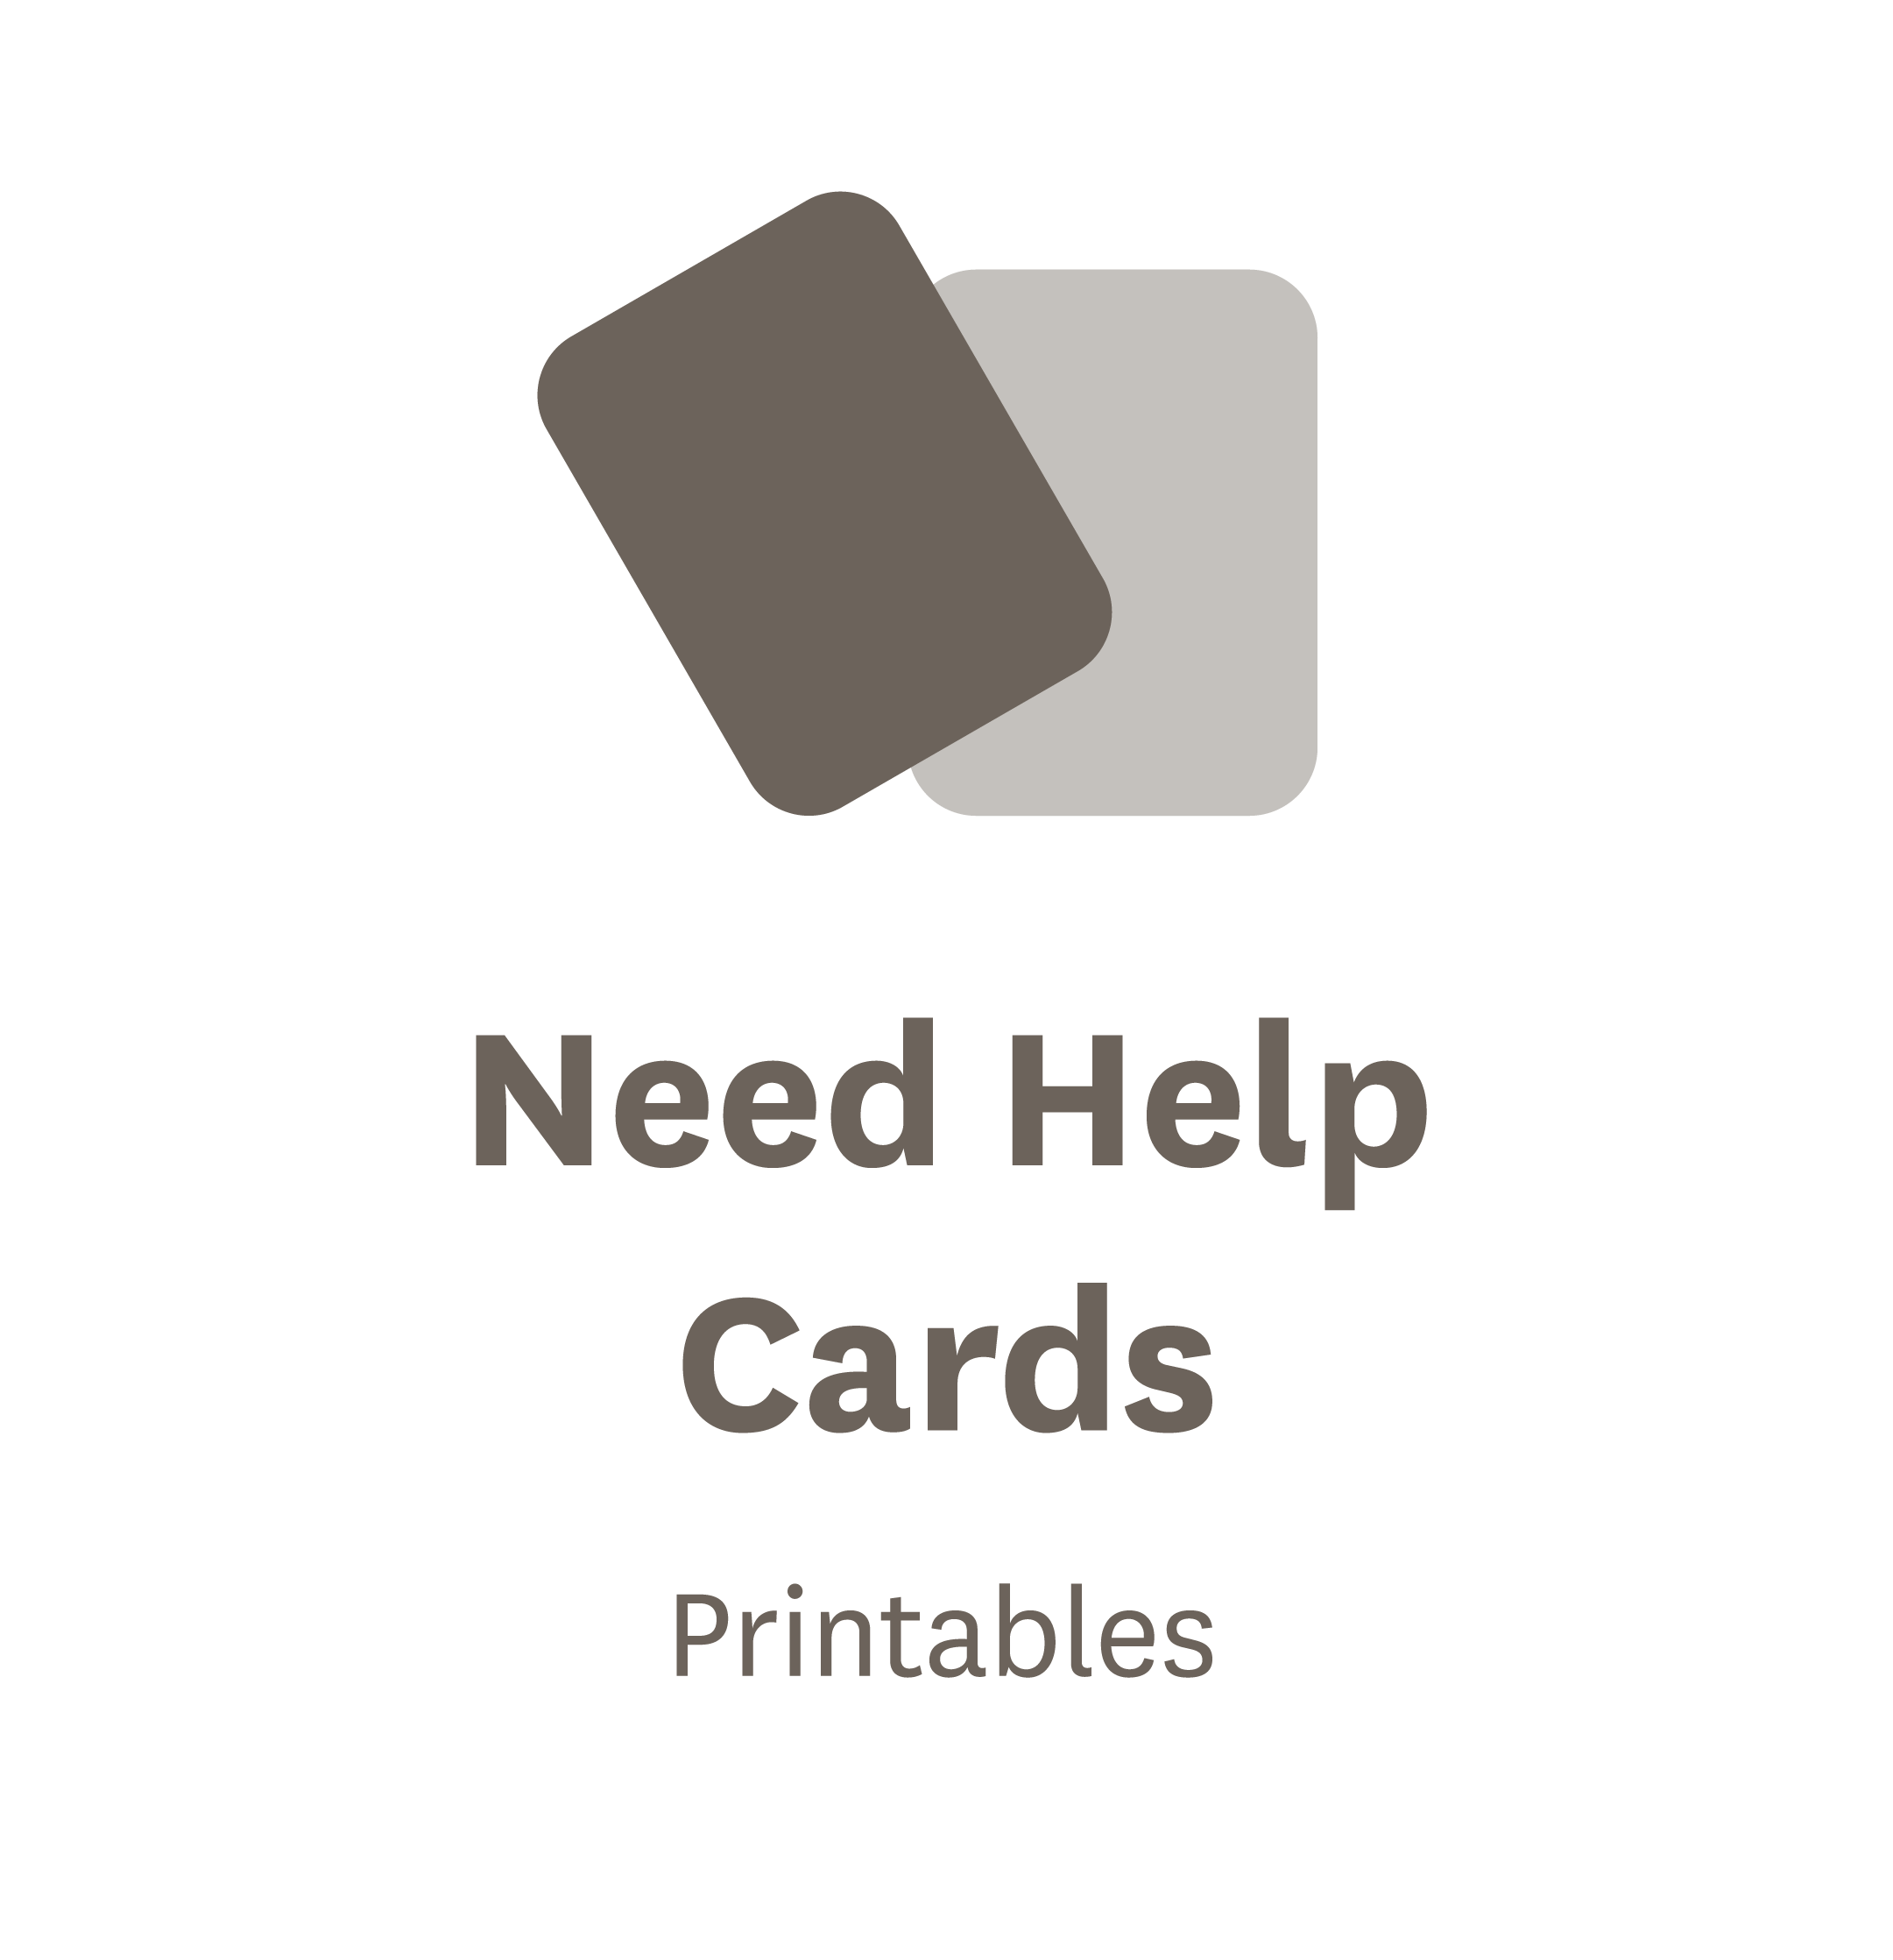 Printable - Need Help Cards